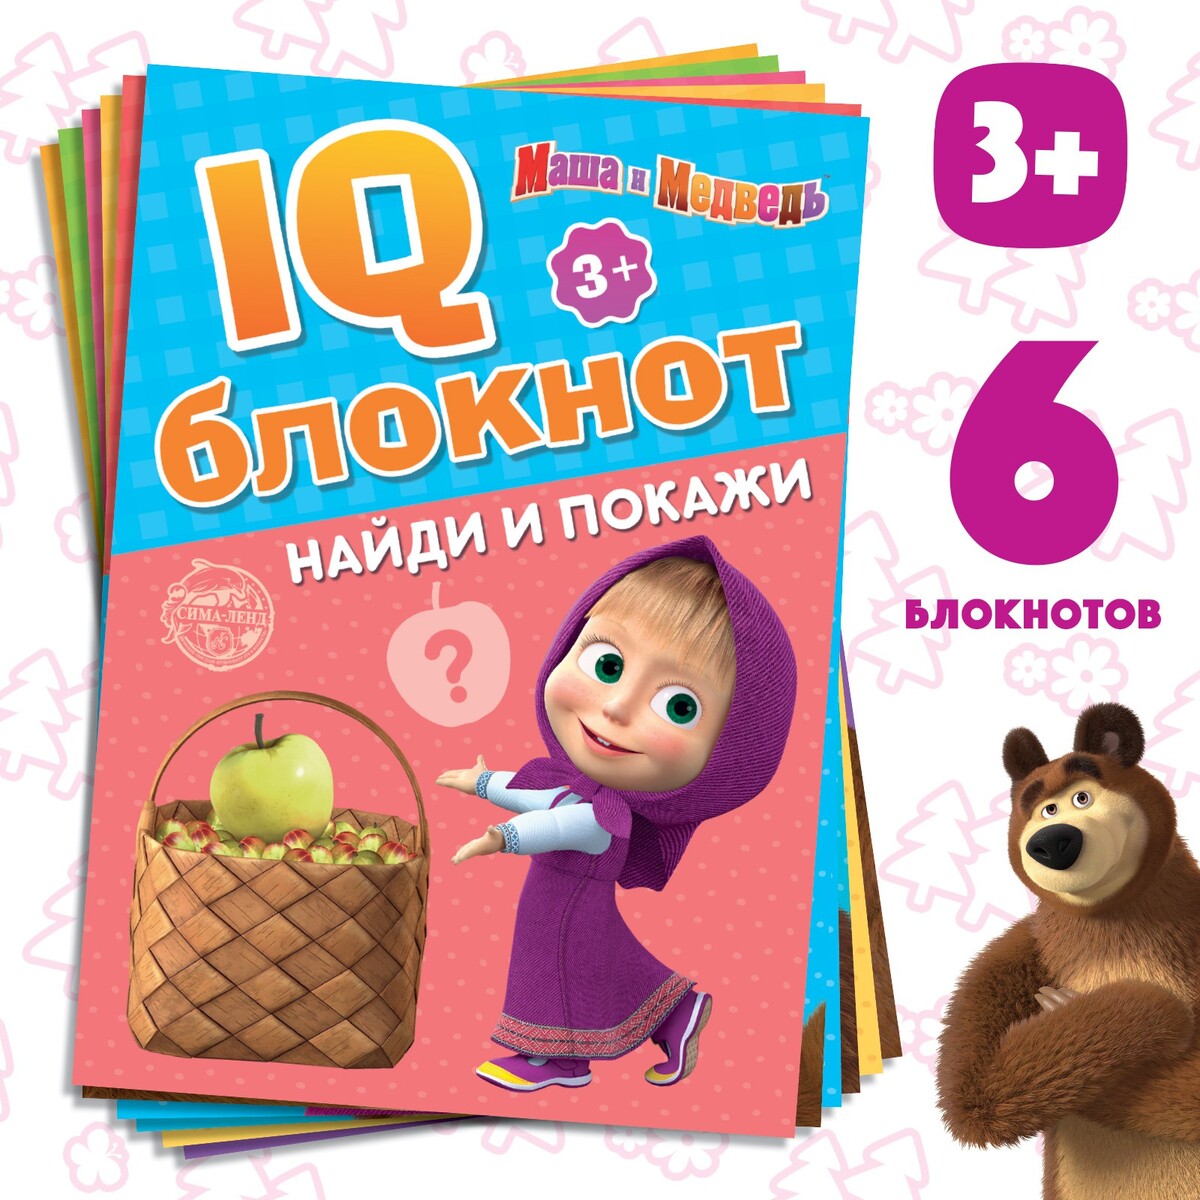 Iq-блокноты набор, 6 шт. по 20 стр., 12 × 17 см, маша и медведь набор игровой ракетки 8×12 см и два мячика маша и медведь